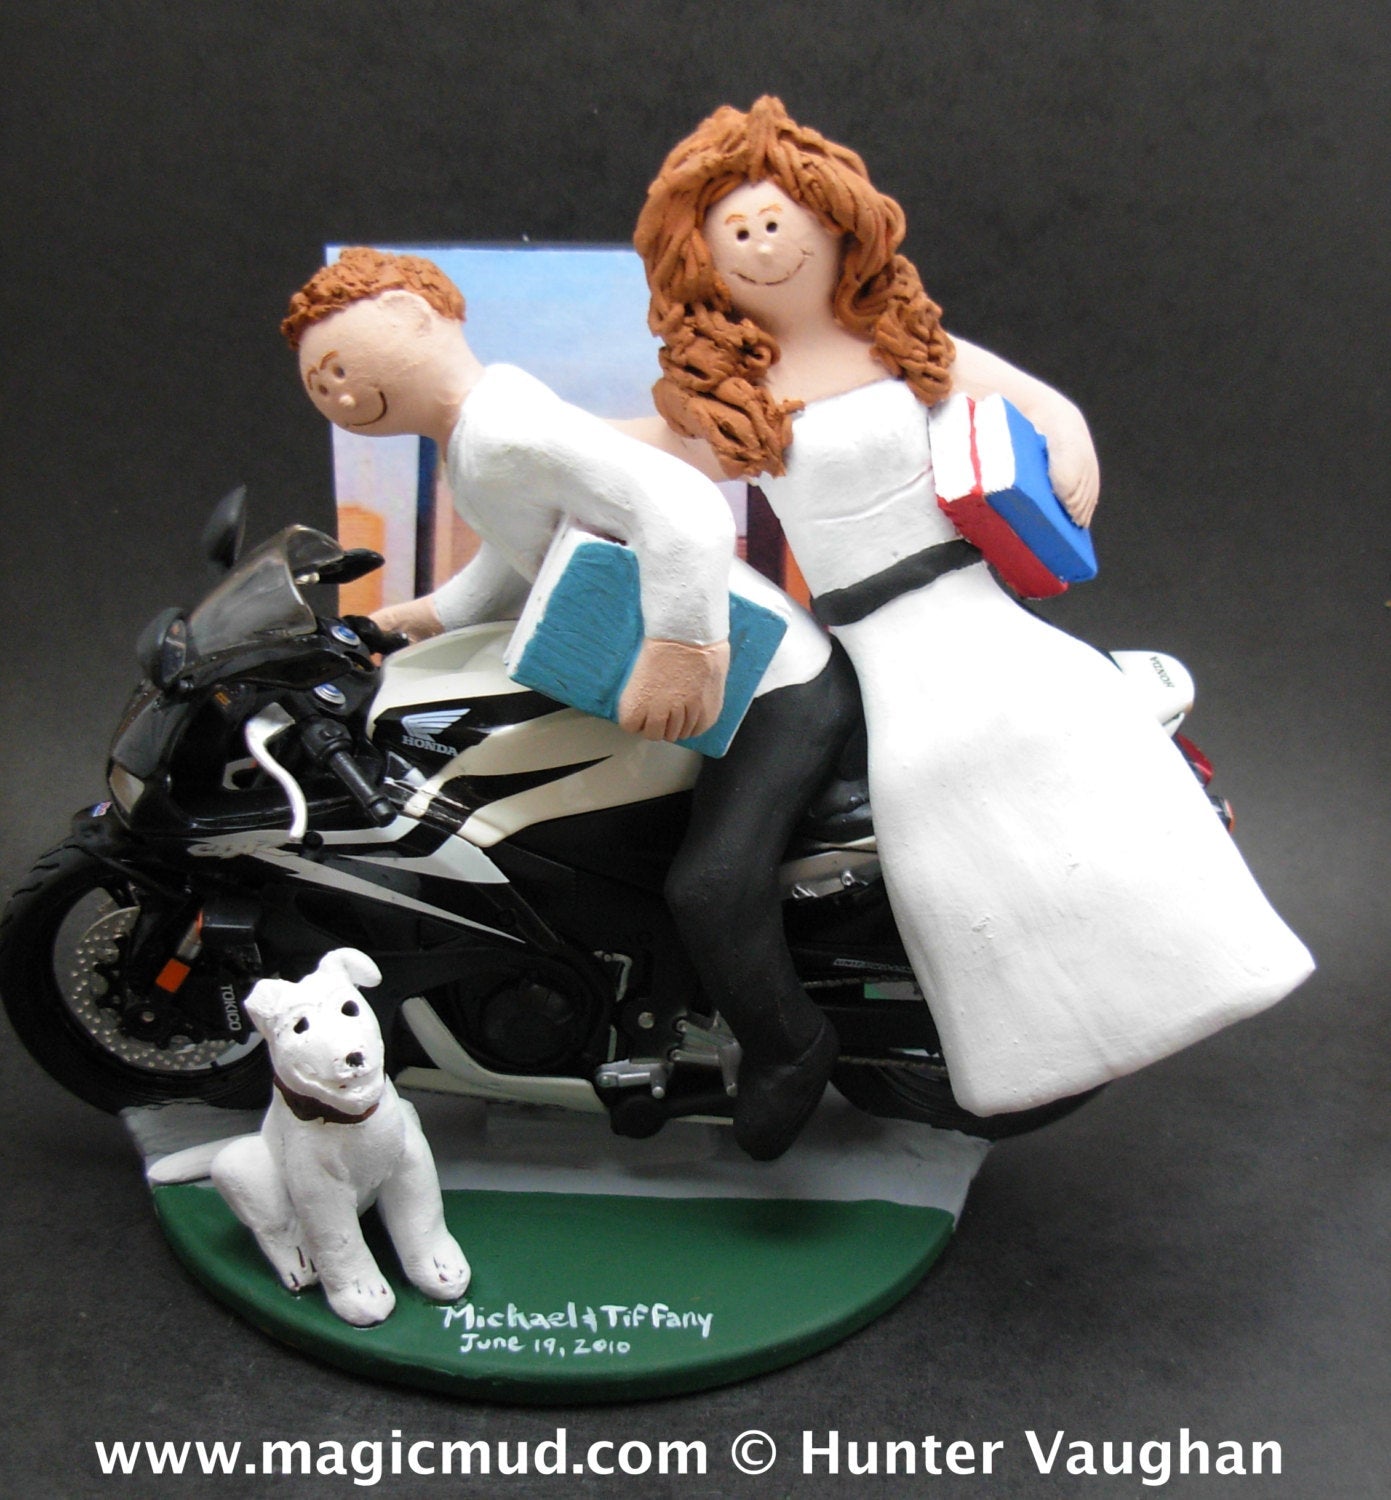 Honda Sportbike Motorcycle Wedding CakeTopper, Motorcycle Wedding Anniversary Gift, Sport Motorcycle Wedding CakeTopper,Honda Wedding Statue - iWeddingCakeToppers